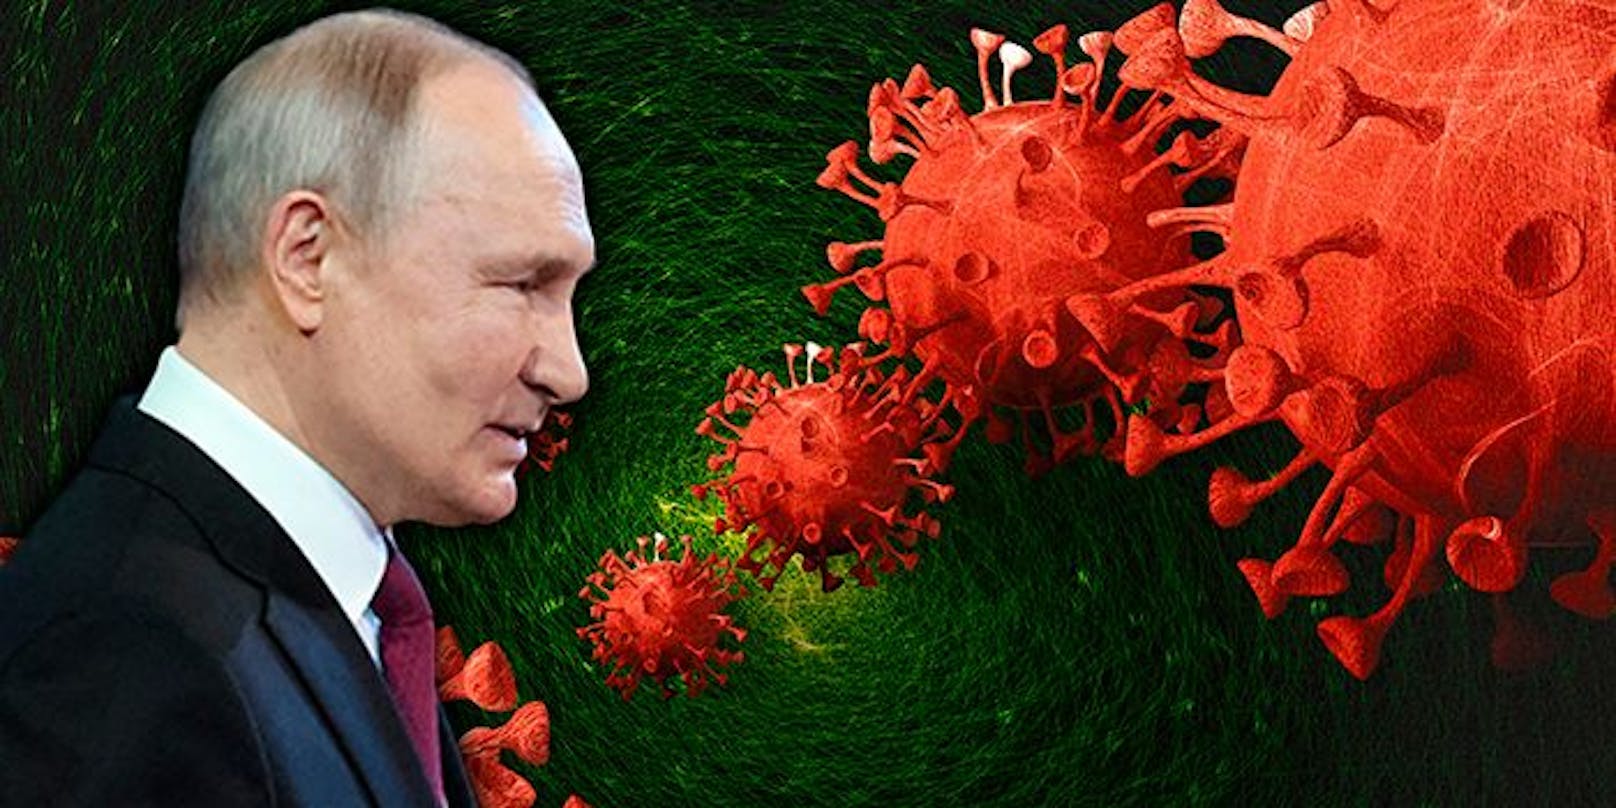 Russischer Präsident Putin – laut den aktuellen Leaks hat er Krebs.